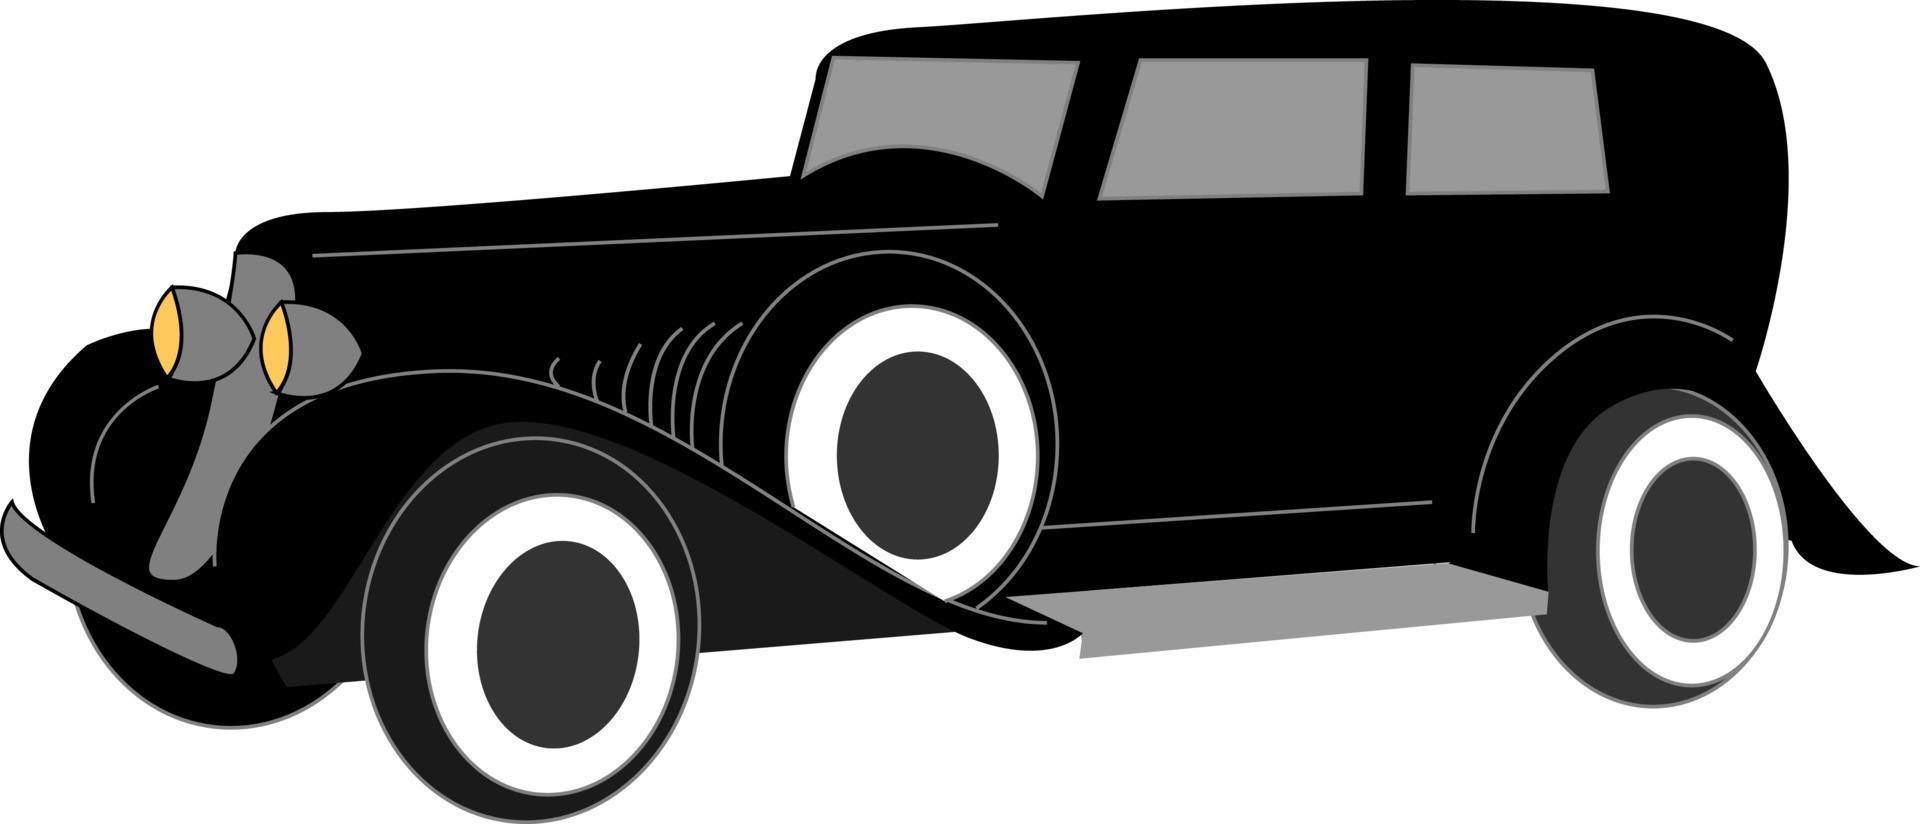 Black old retro car, illustration, vector on white background.